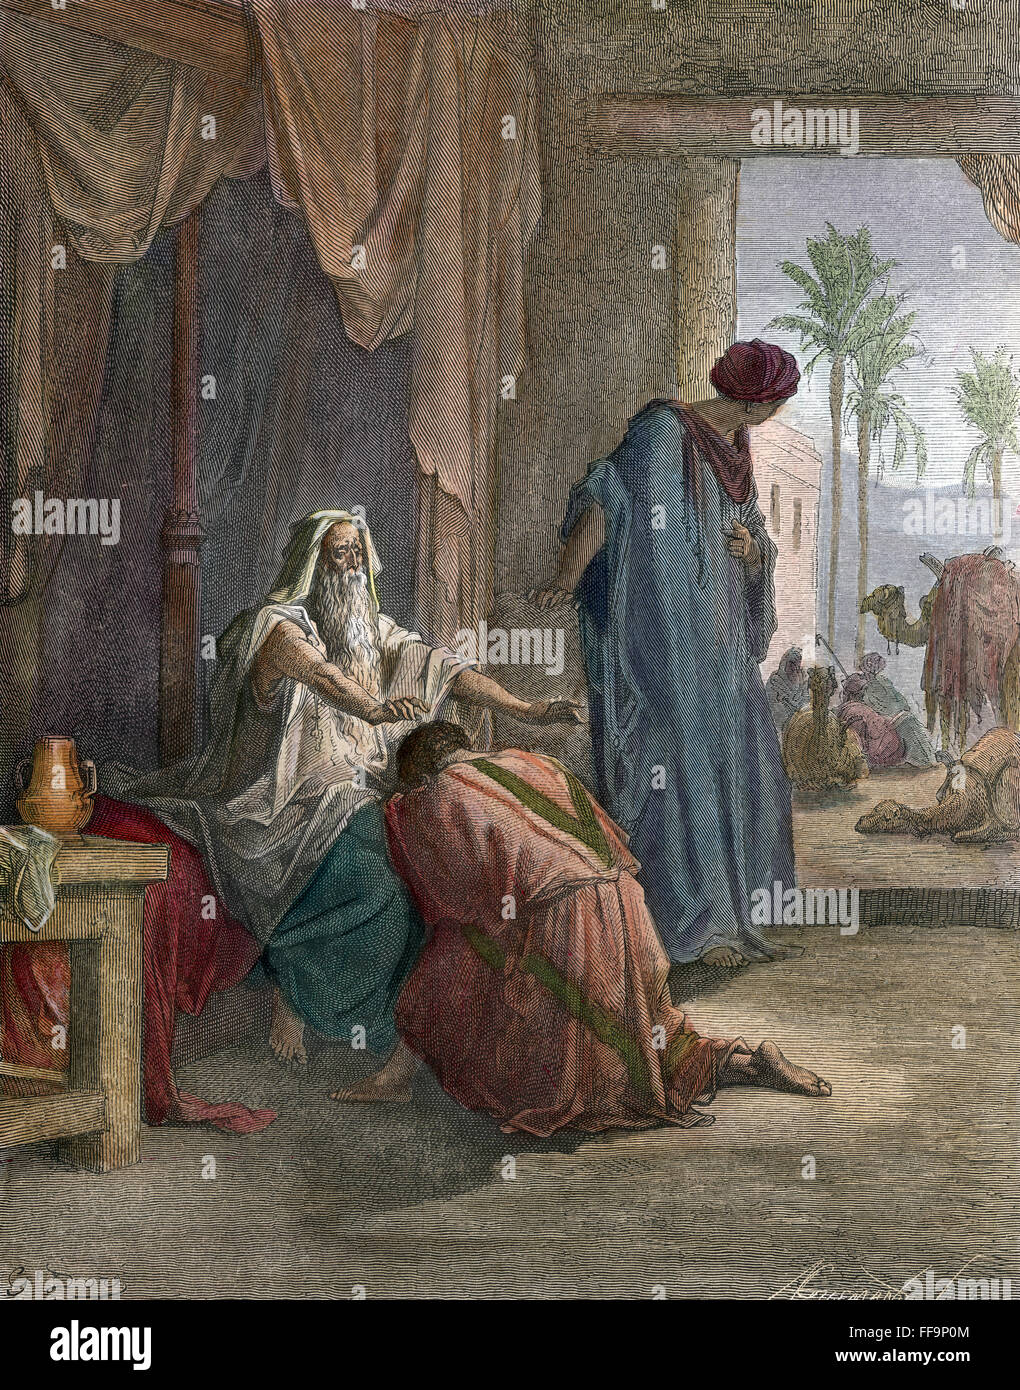 ISAAC & JACOB. /nIsaac blessing Jacob (Genesis 27: 26-29). Wood engraving after Gustave DorΘ. Stock Photo